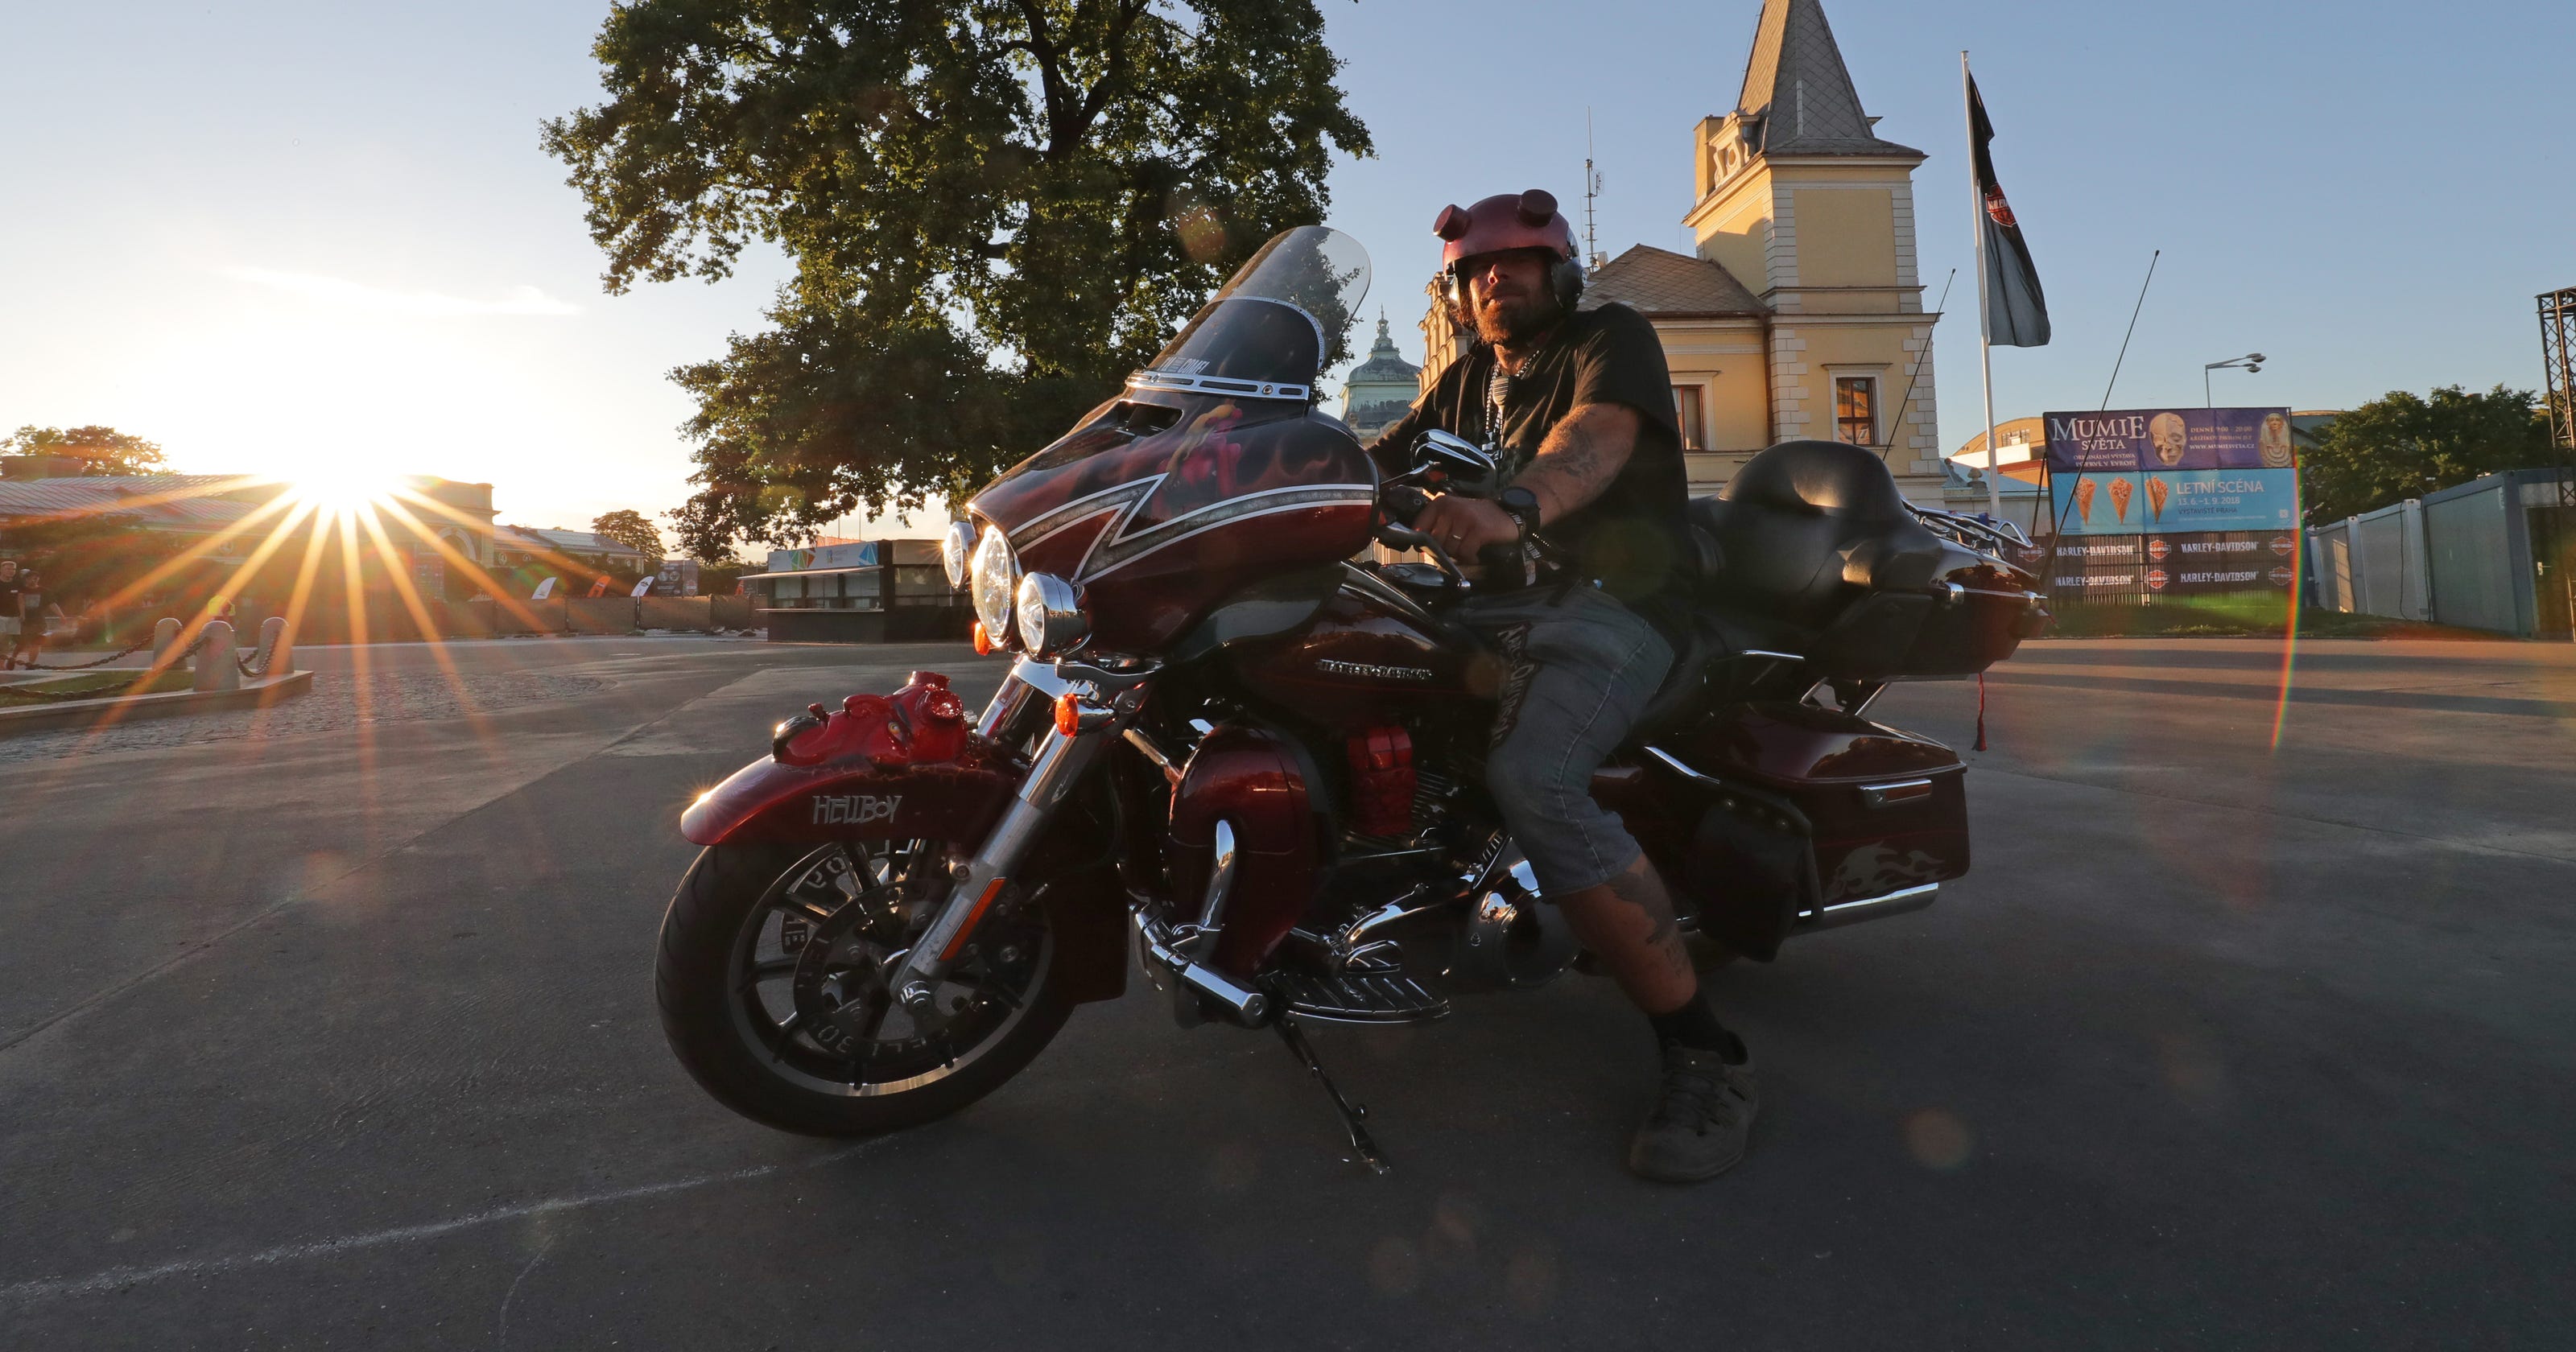 Harley Davidson Prague 115th Anniversary Event Has International Riders